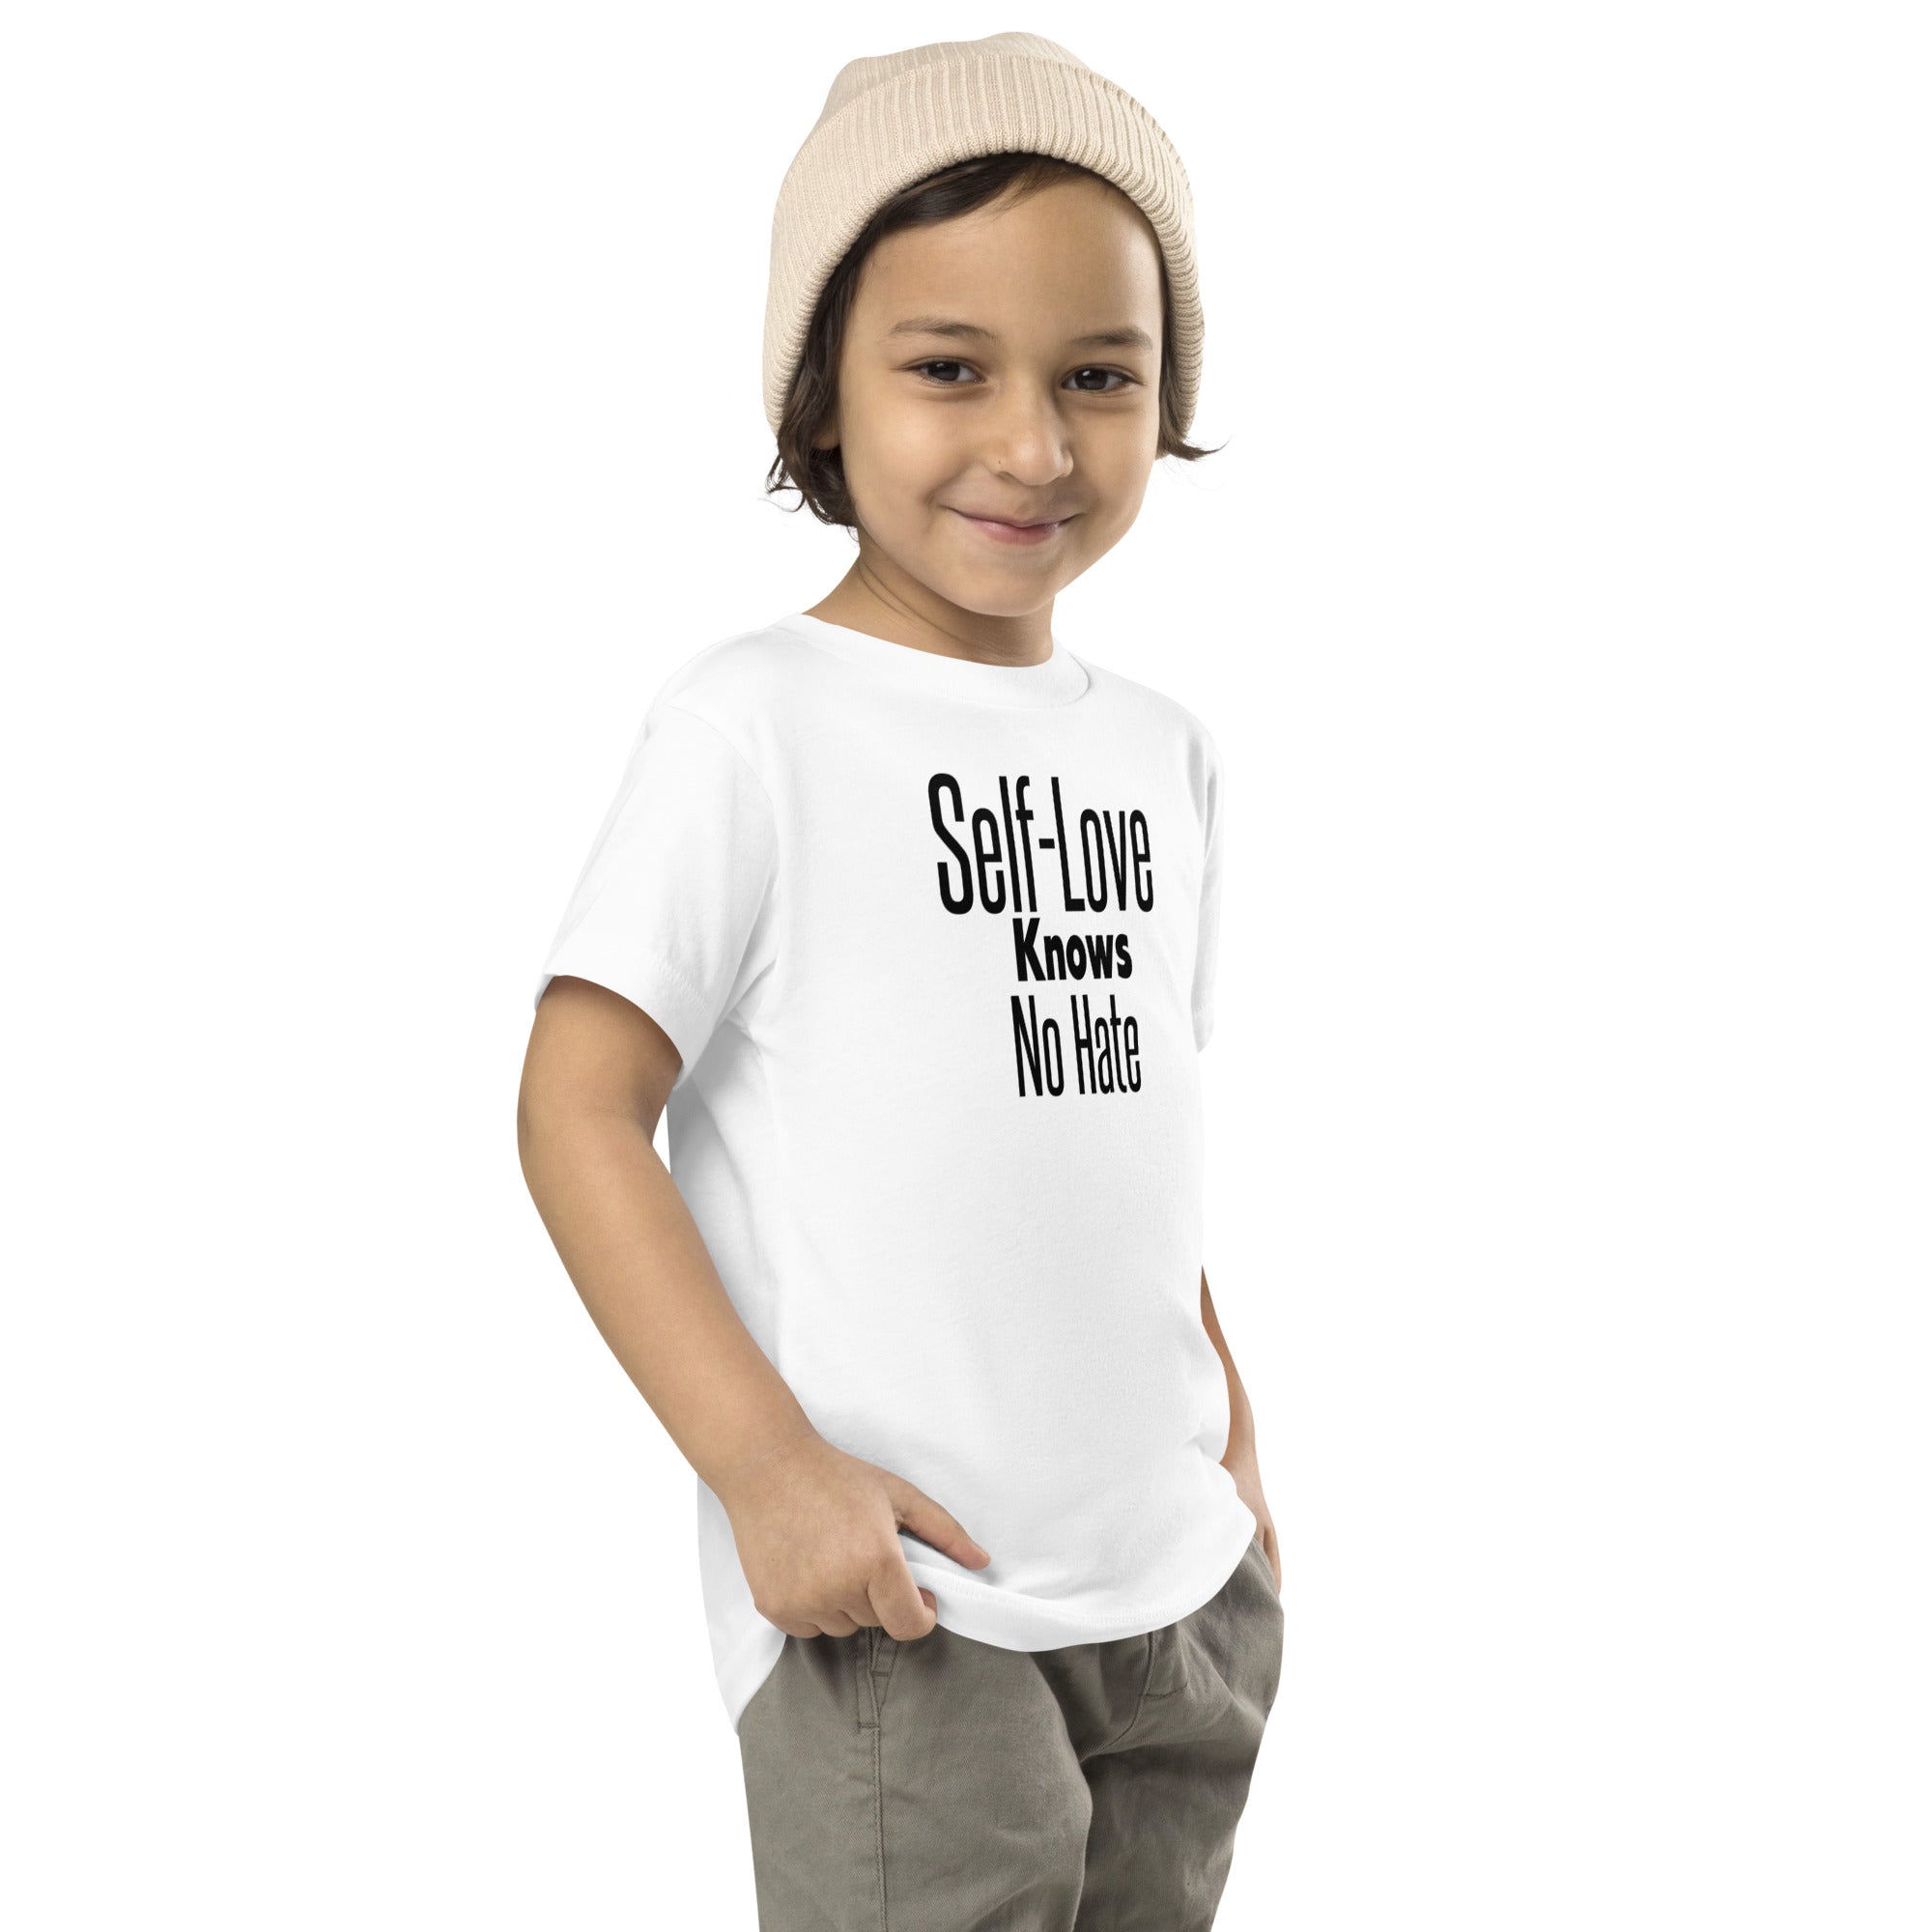 Self-Love Toddler T-shirt - Sabrena Sharonne